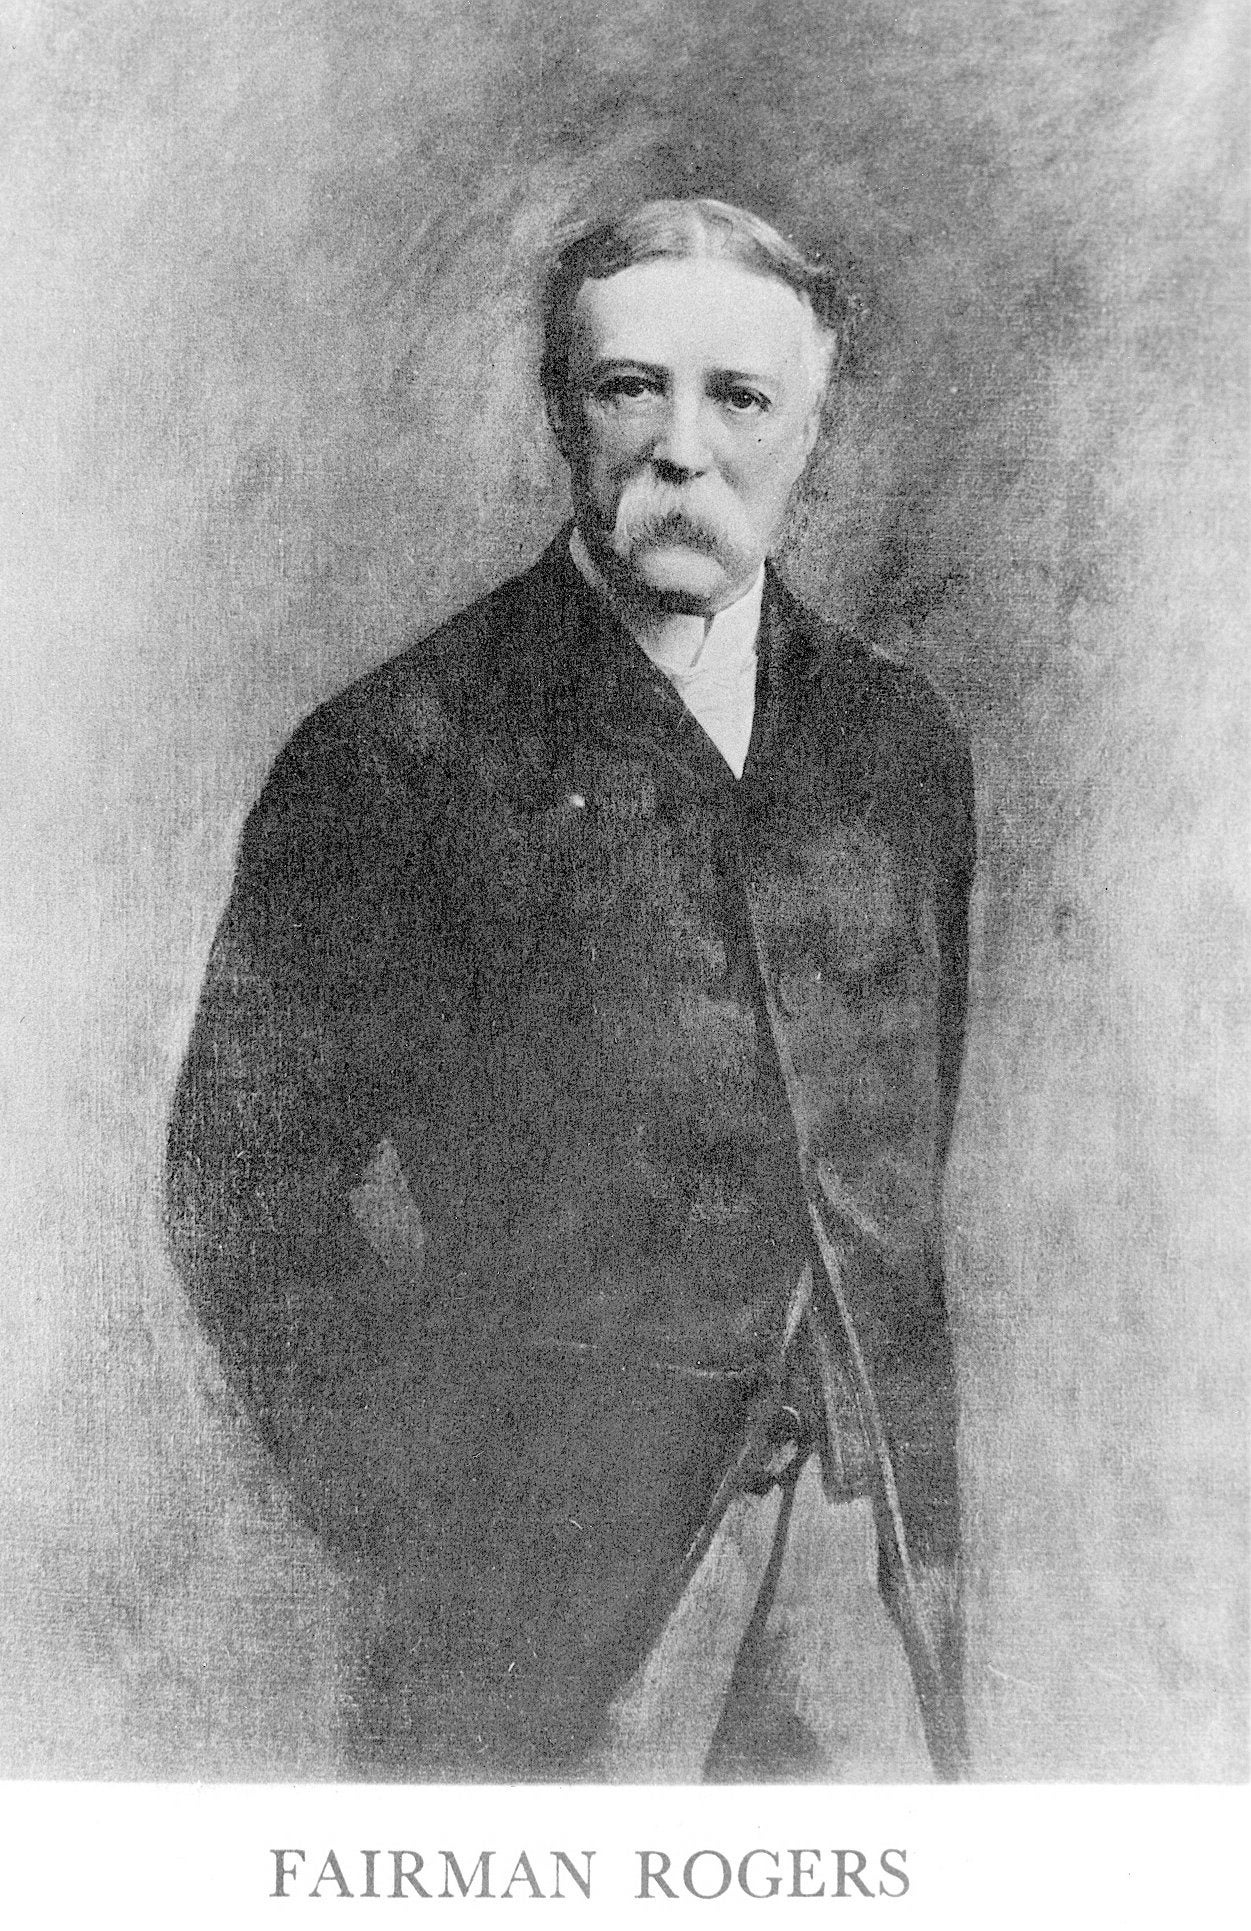 Fairman Rogers, c. 1890